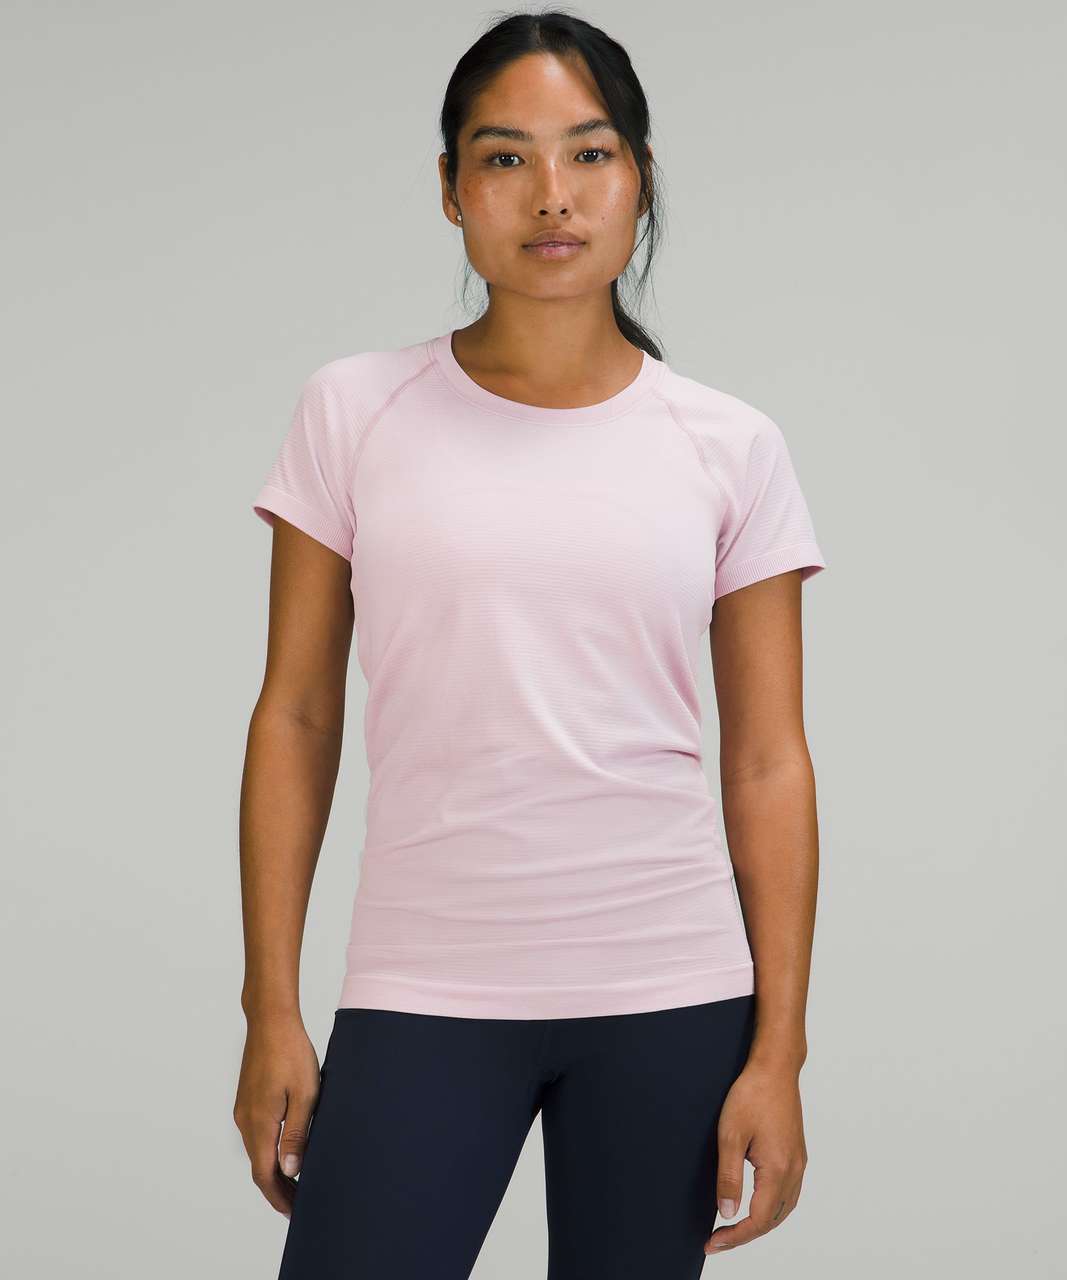 Lululemon Swiftly Tech Short Sleeve Shirt 2.0 - Pink Peony / Pink Peony